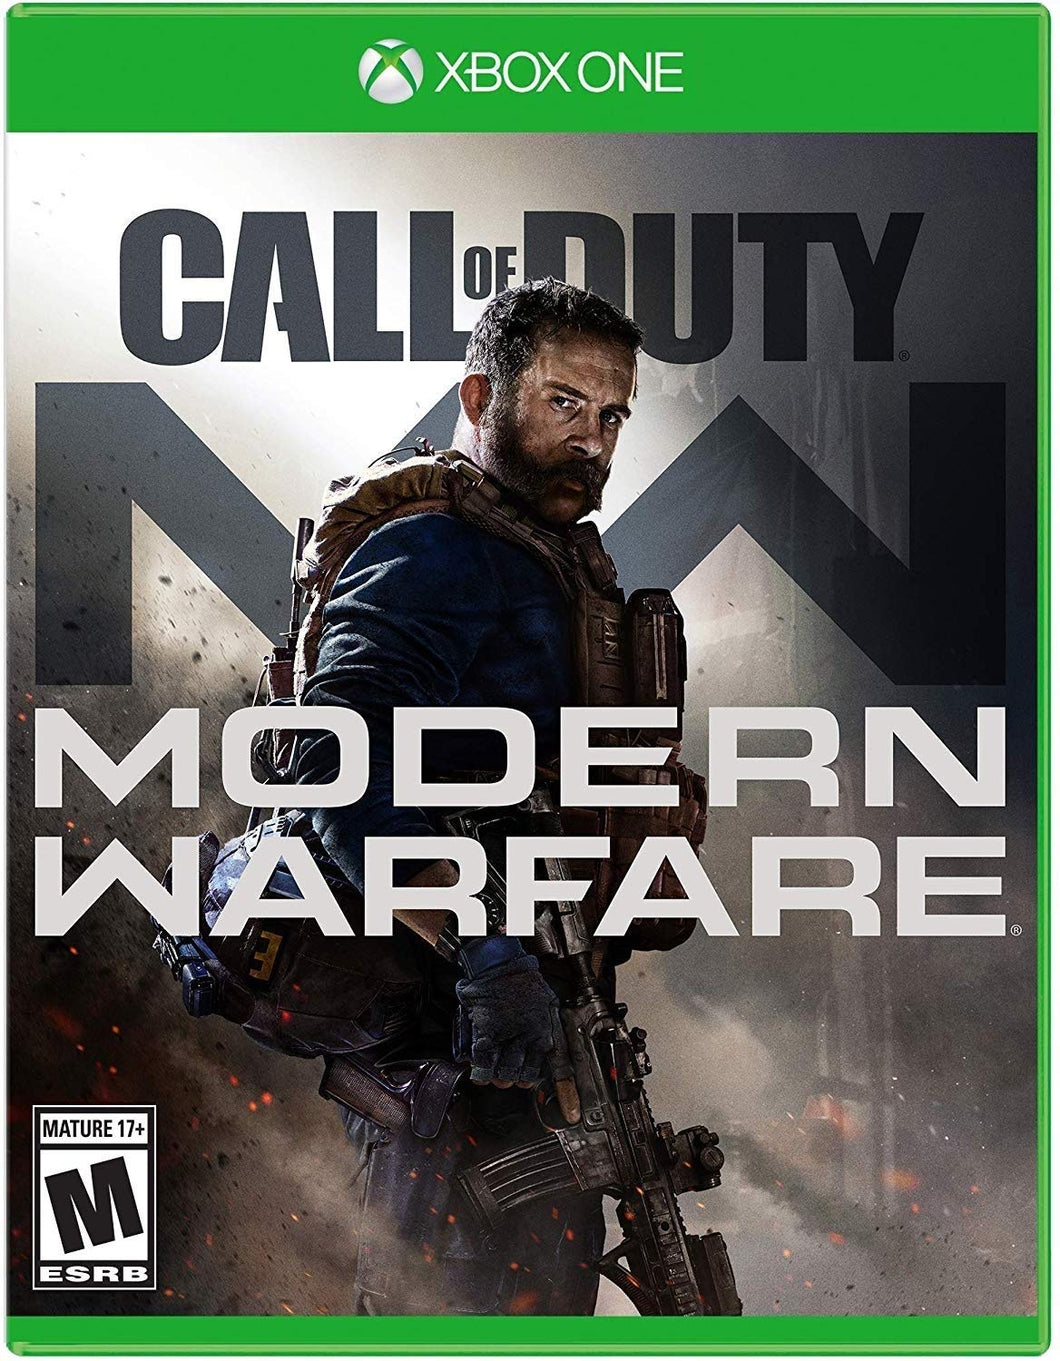 Call of Duty Modern Warefare XBONE